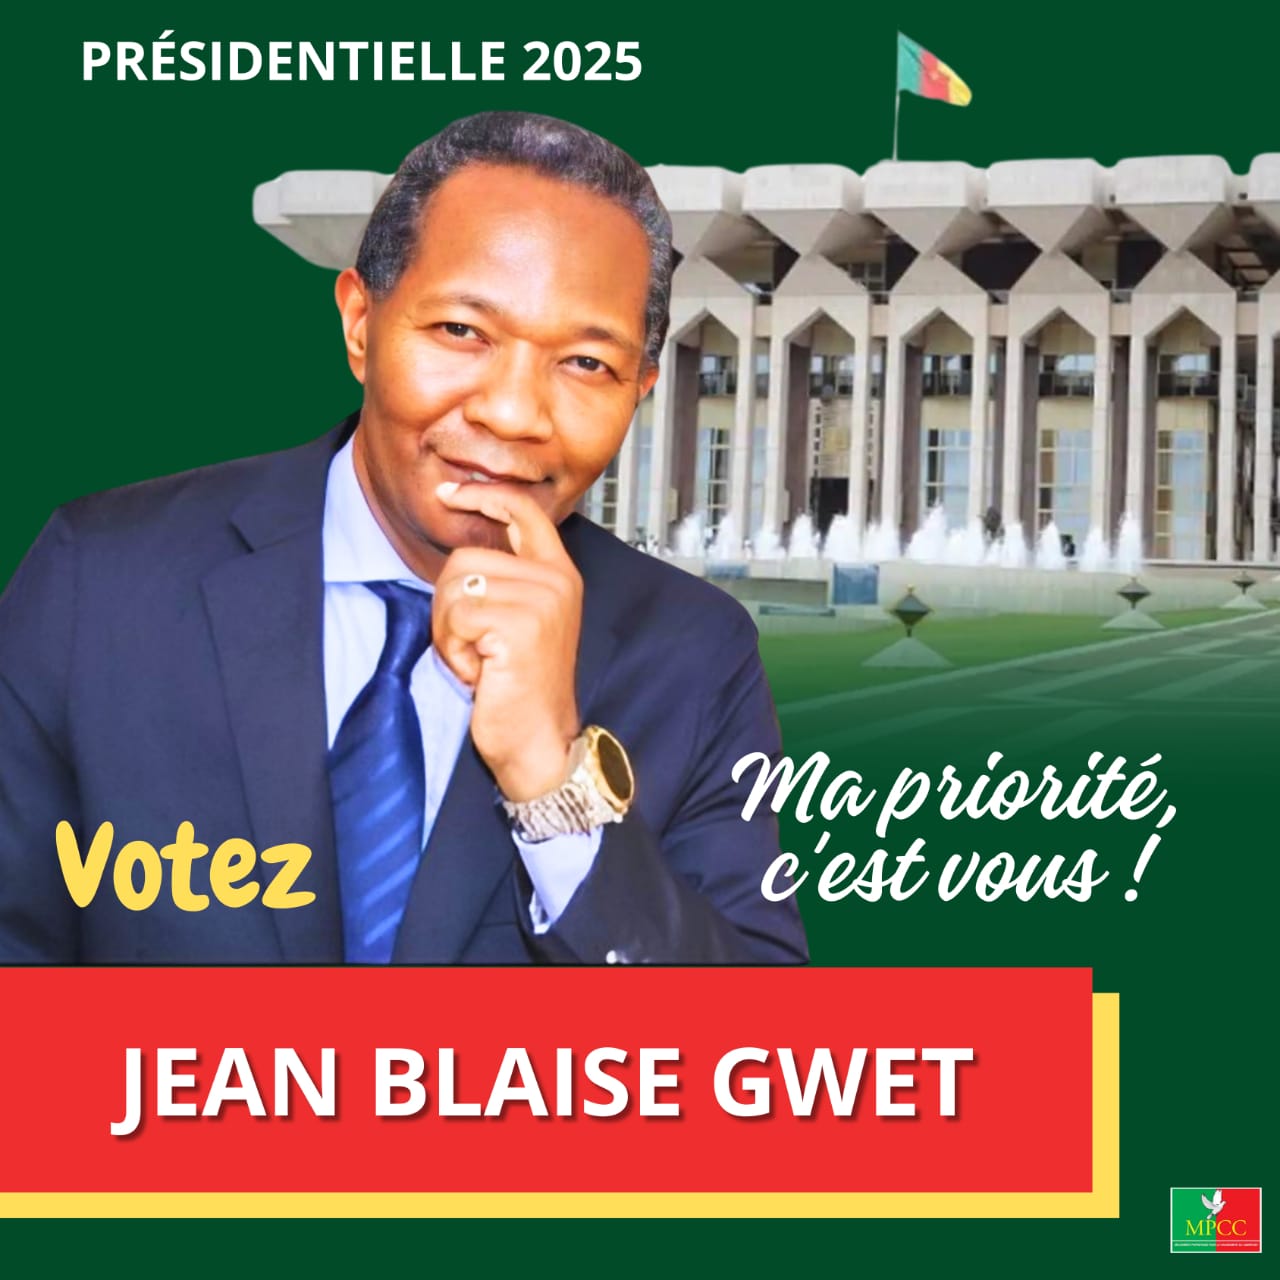 Jean Blaise GWET Palais 2025